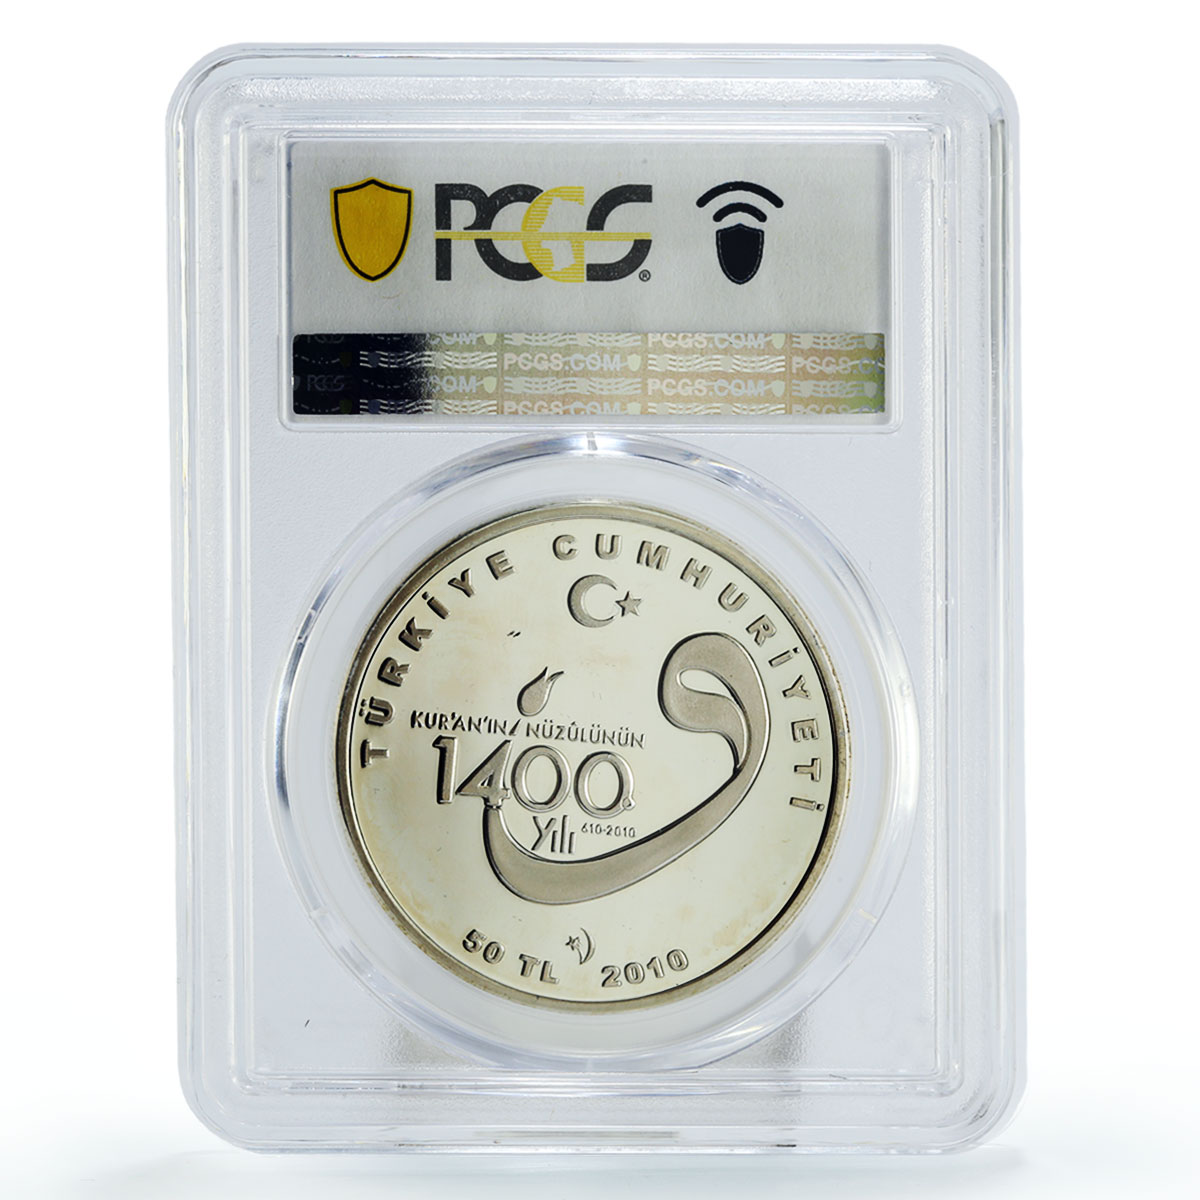 Turkey 50 lira 1400th Anniversary of Koran Literature PR68 PCGS silver coin 2010